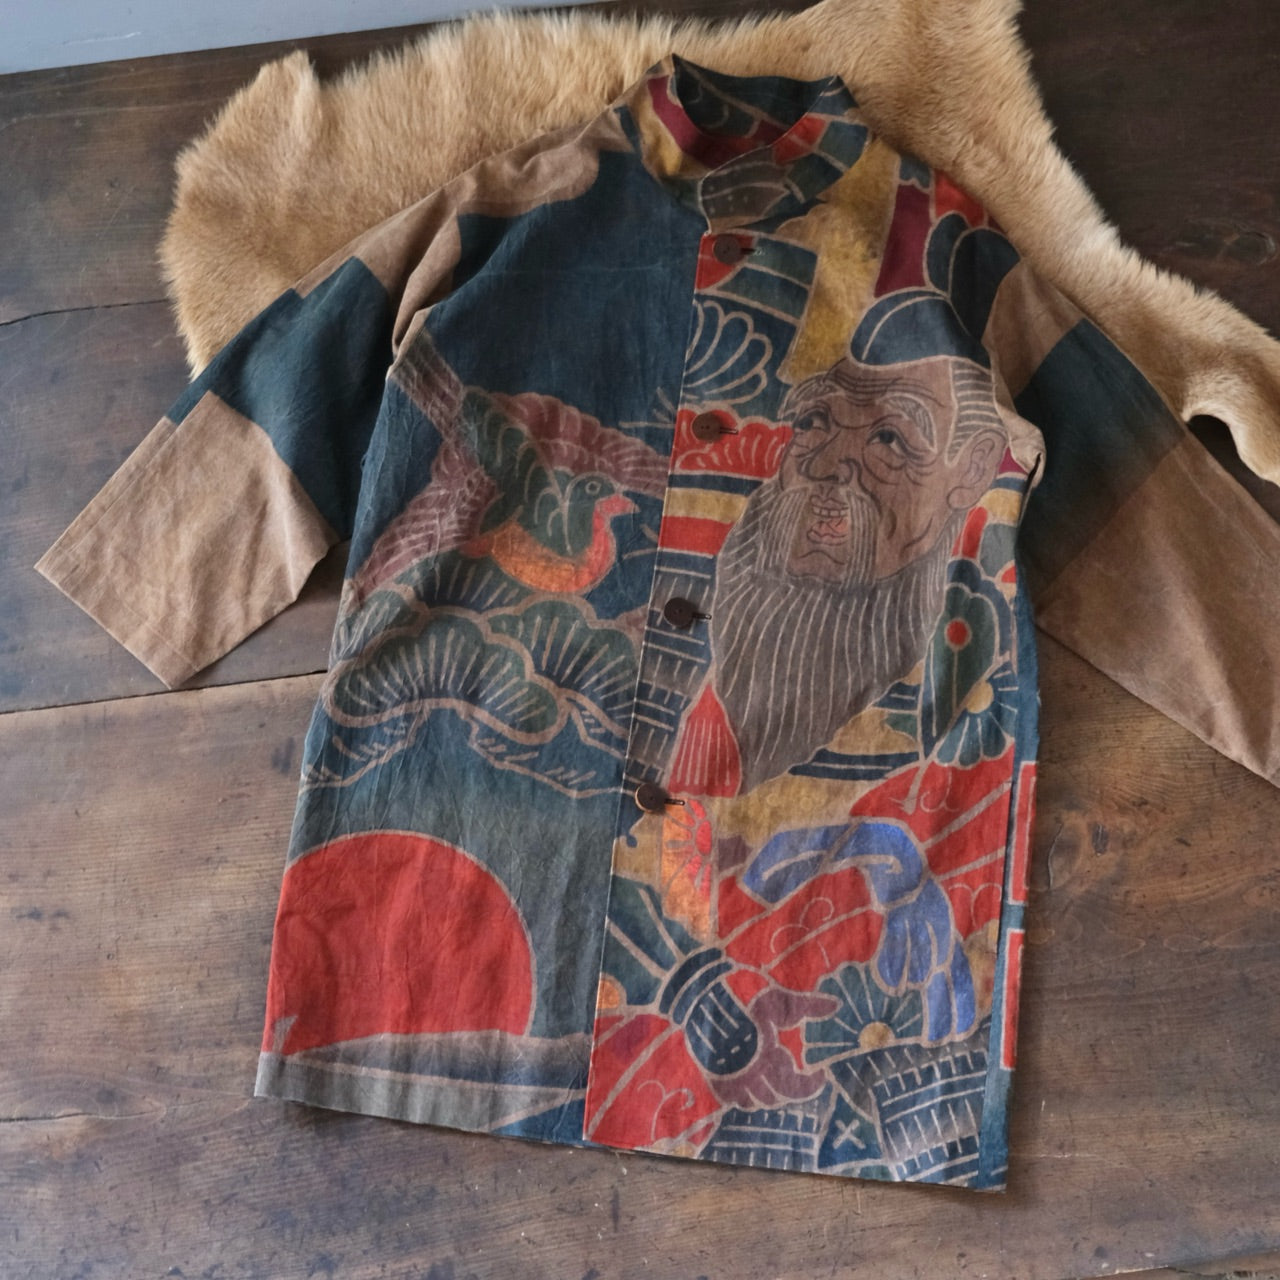 Vintage Japanese TSUTSUGAKI jacket